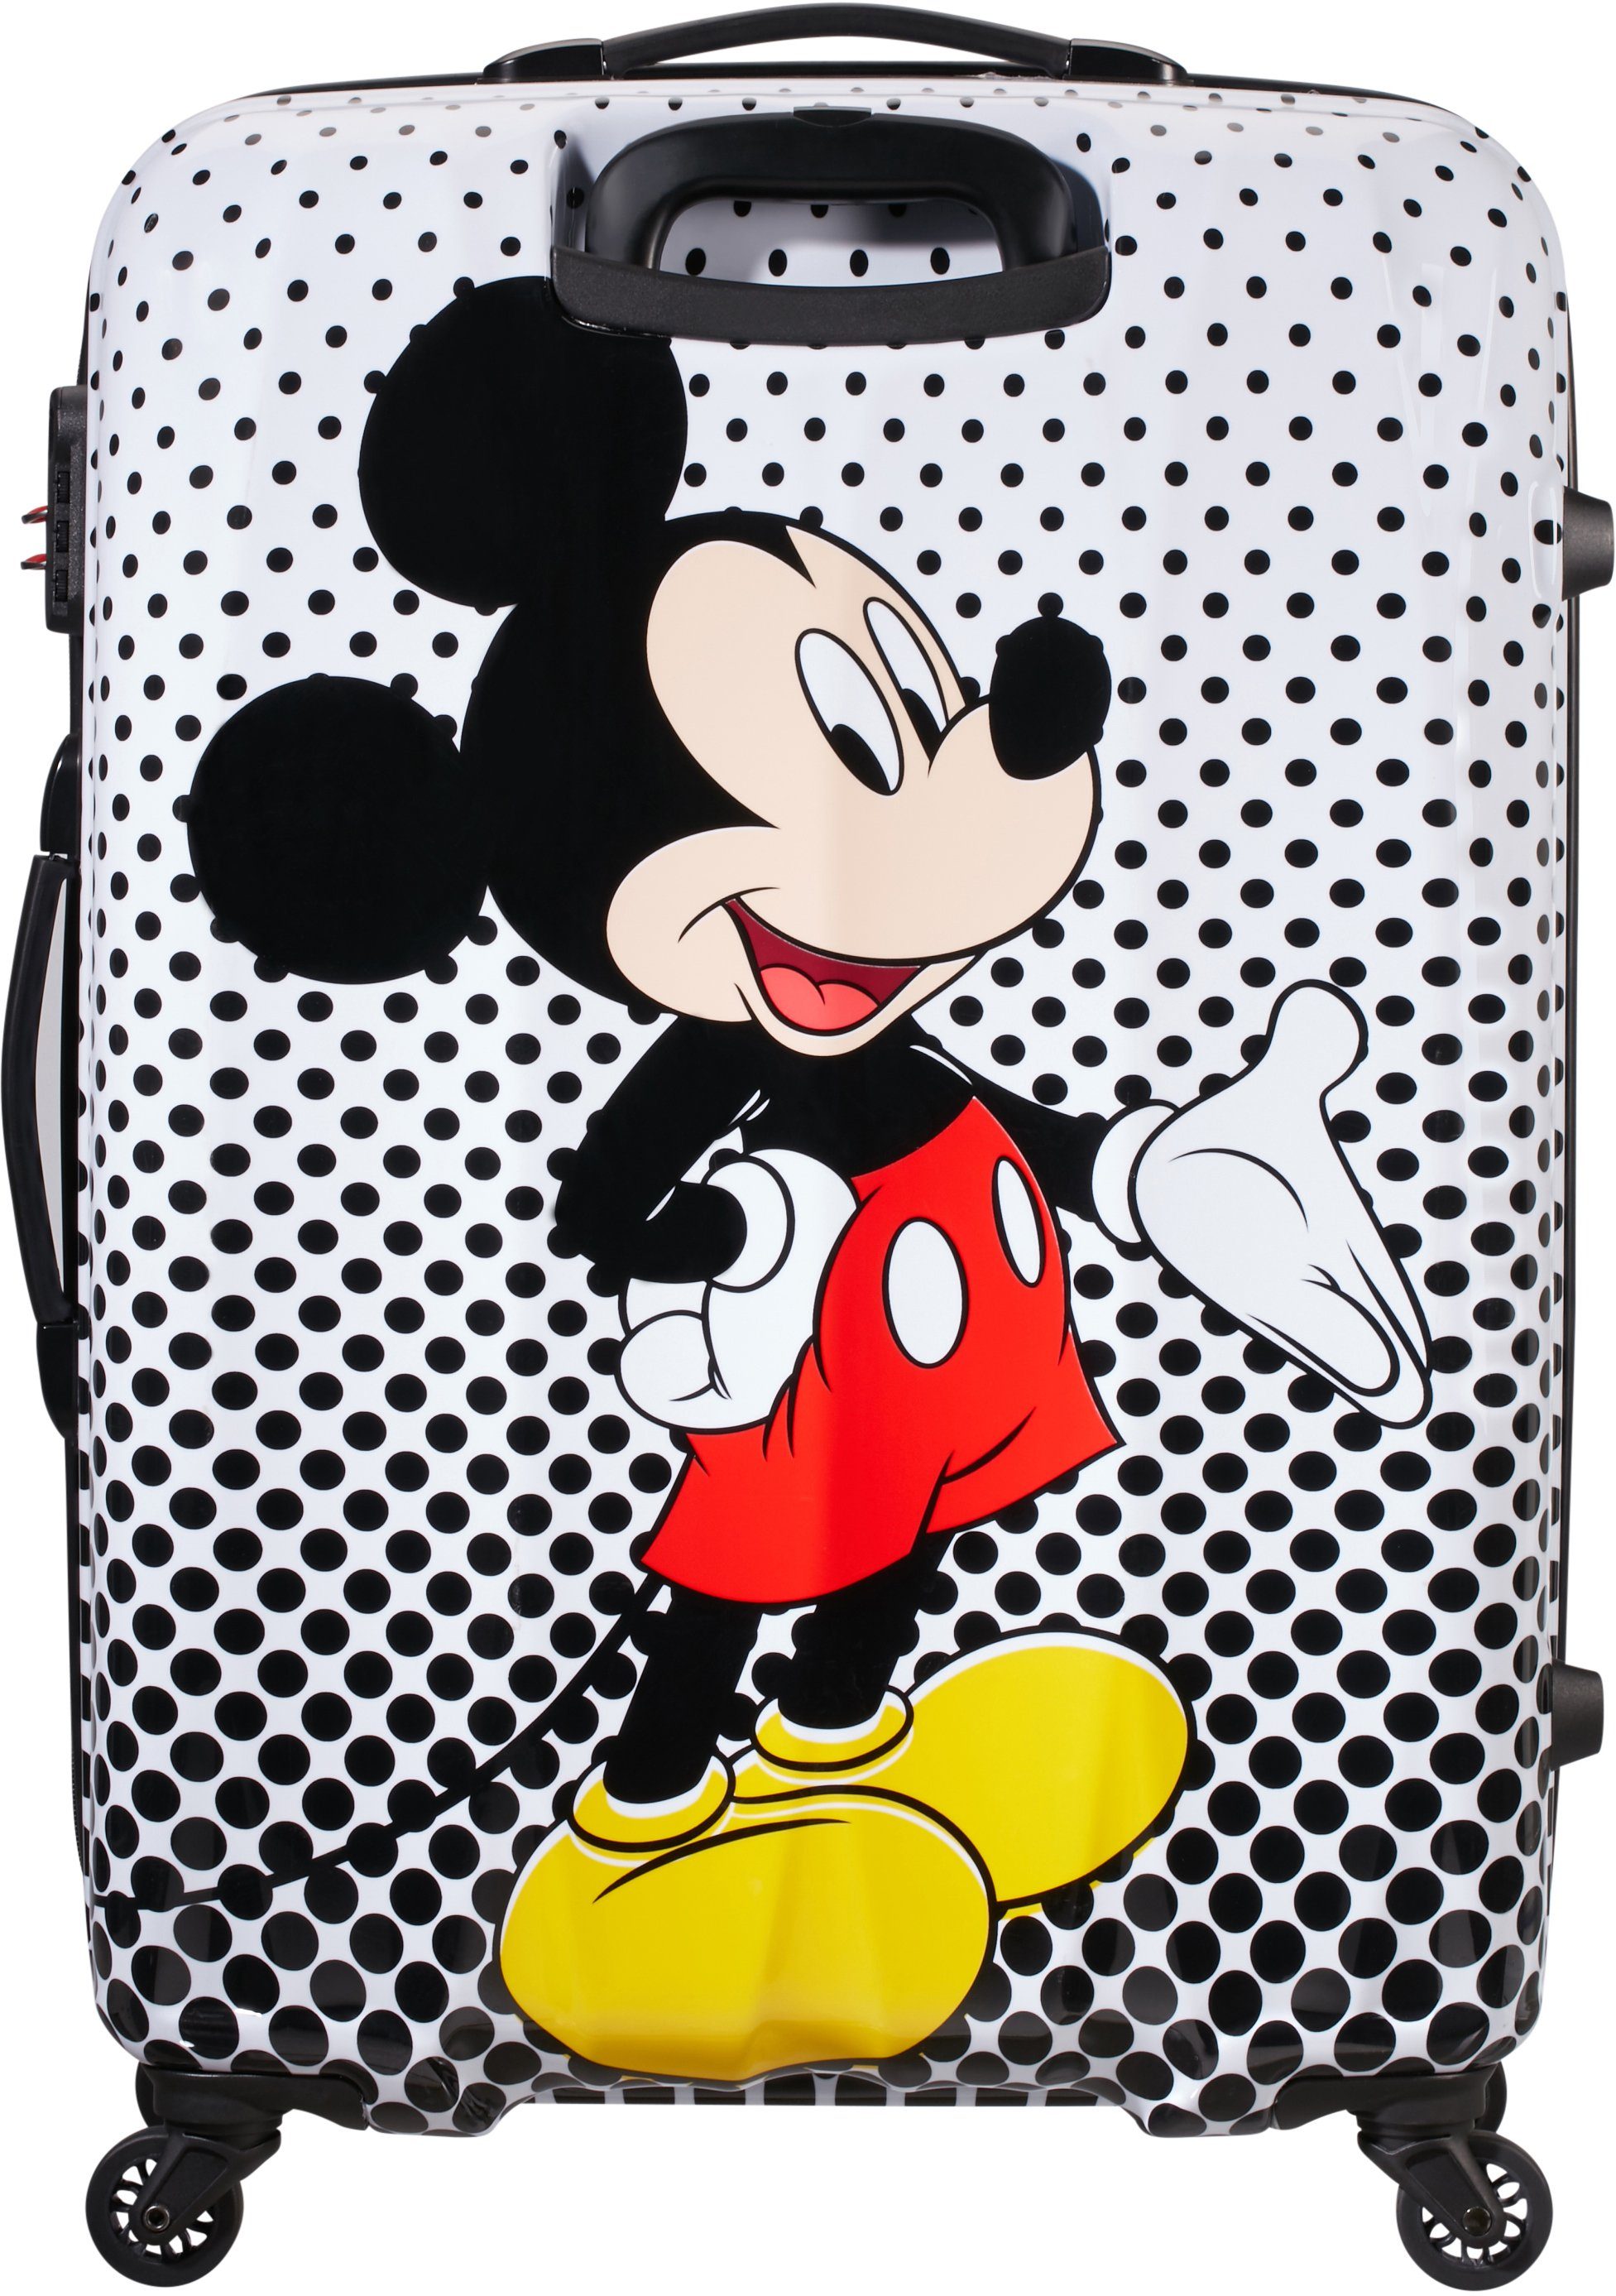 Legends, Dots, Hartschalen-Trolley 75 Mickey Polka Rollen Disney American Mouse 4 Tourister® cm,